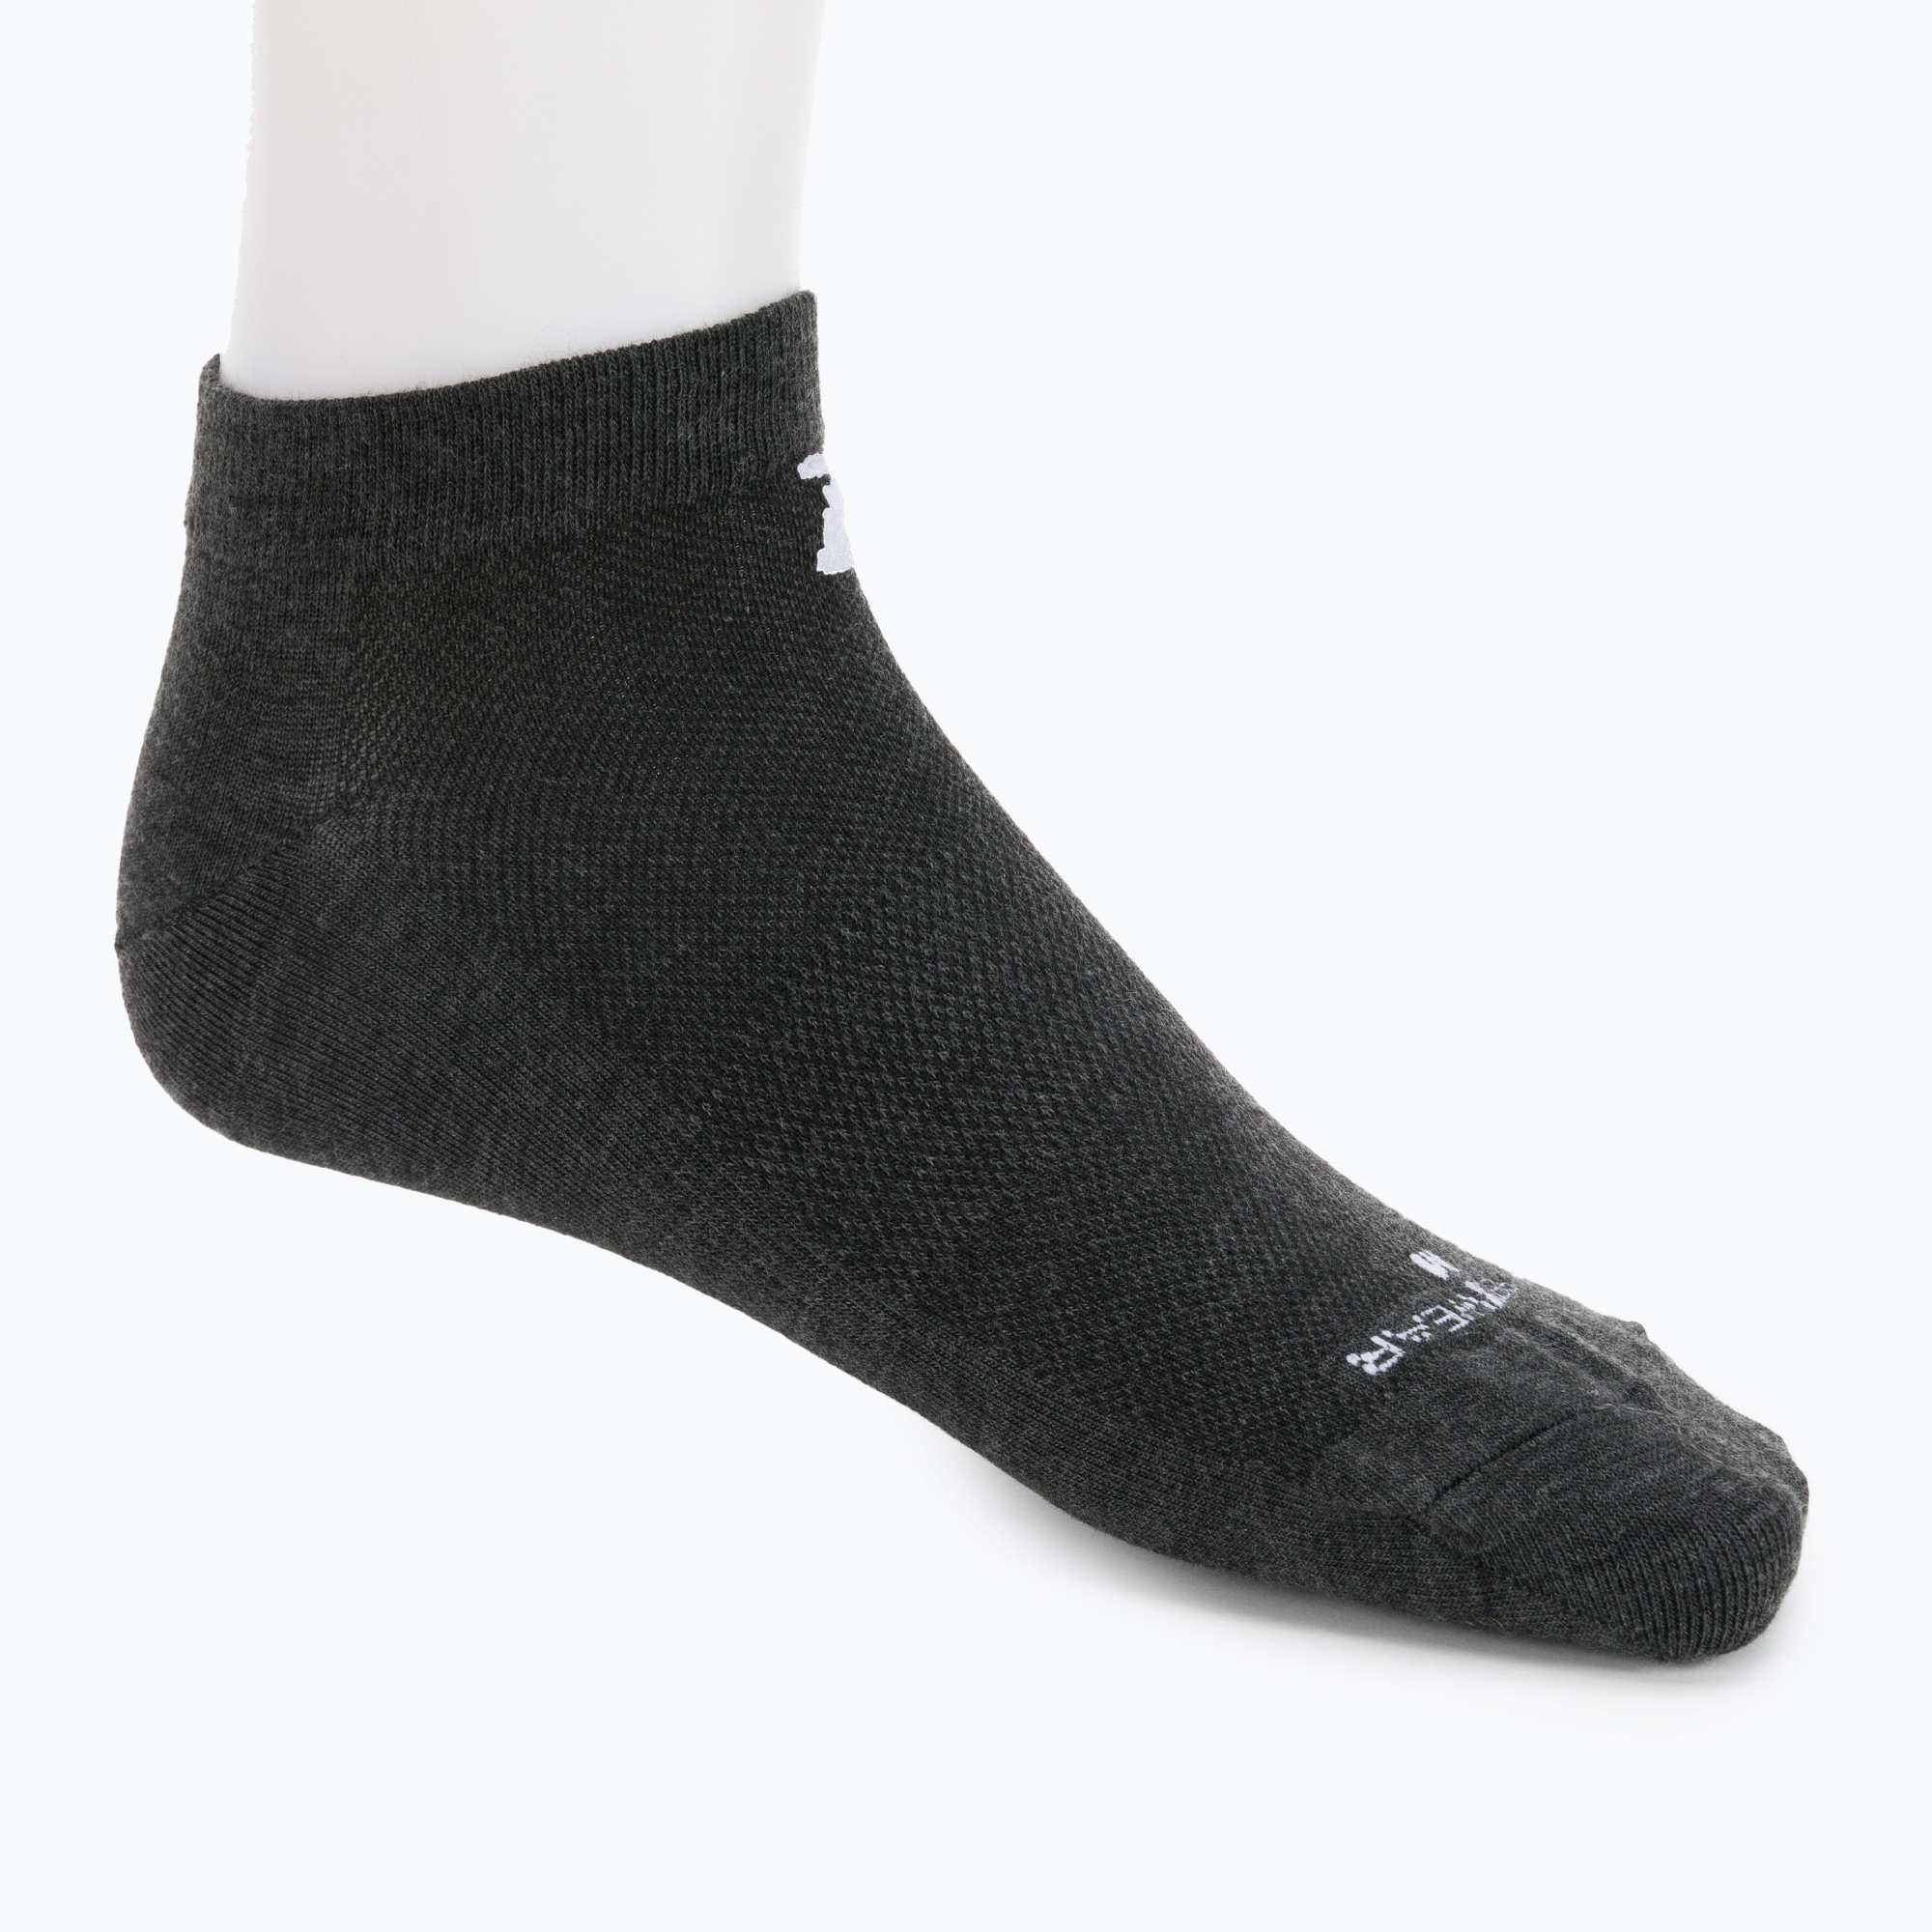 Incrediwear Run ponožky čierne NS207